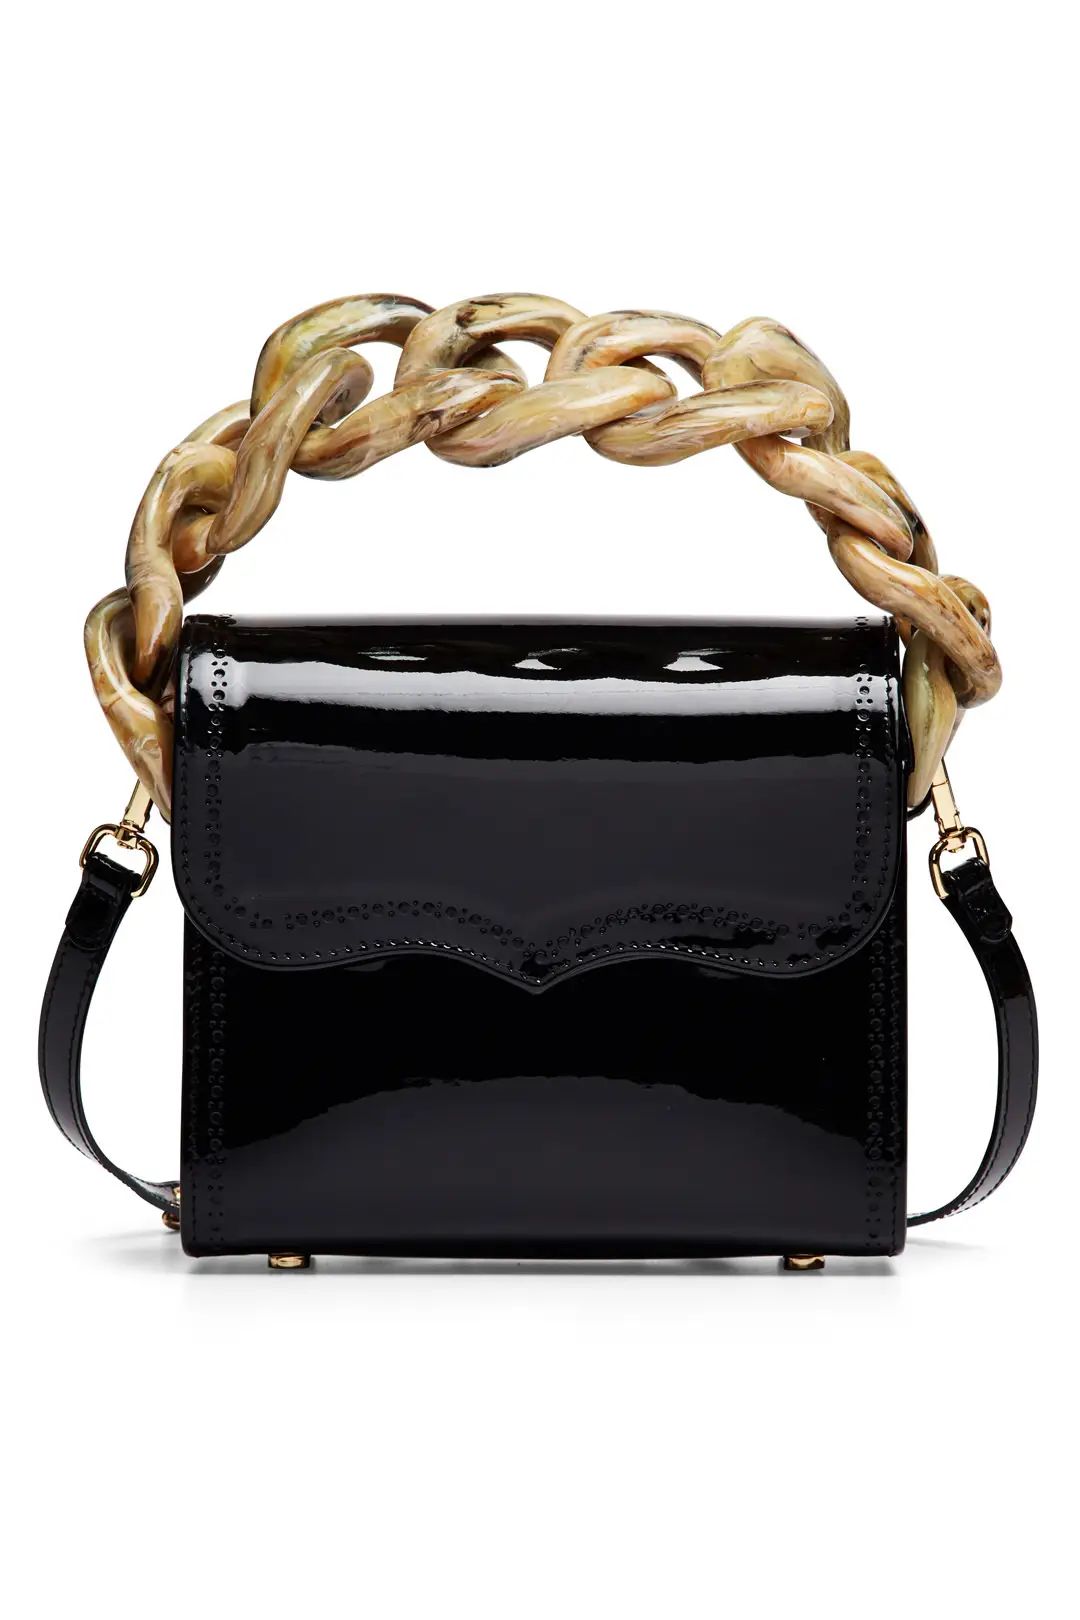 Marques' Almeida Handbags Chunky Chain Bag | Rent The Runway